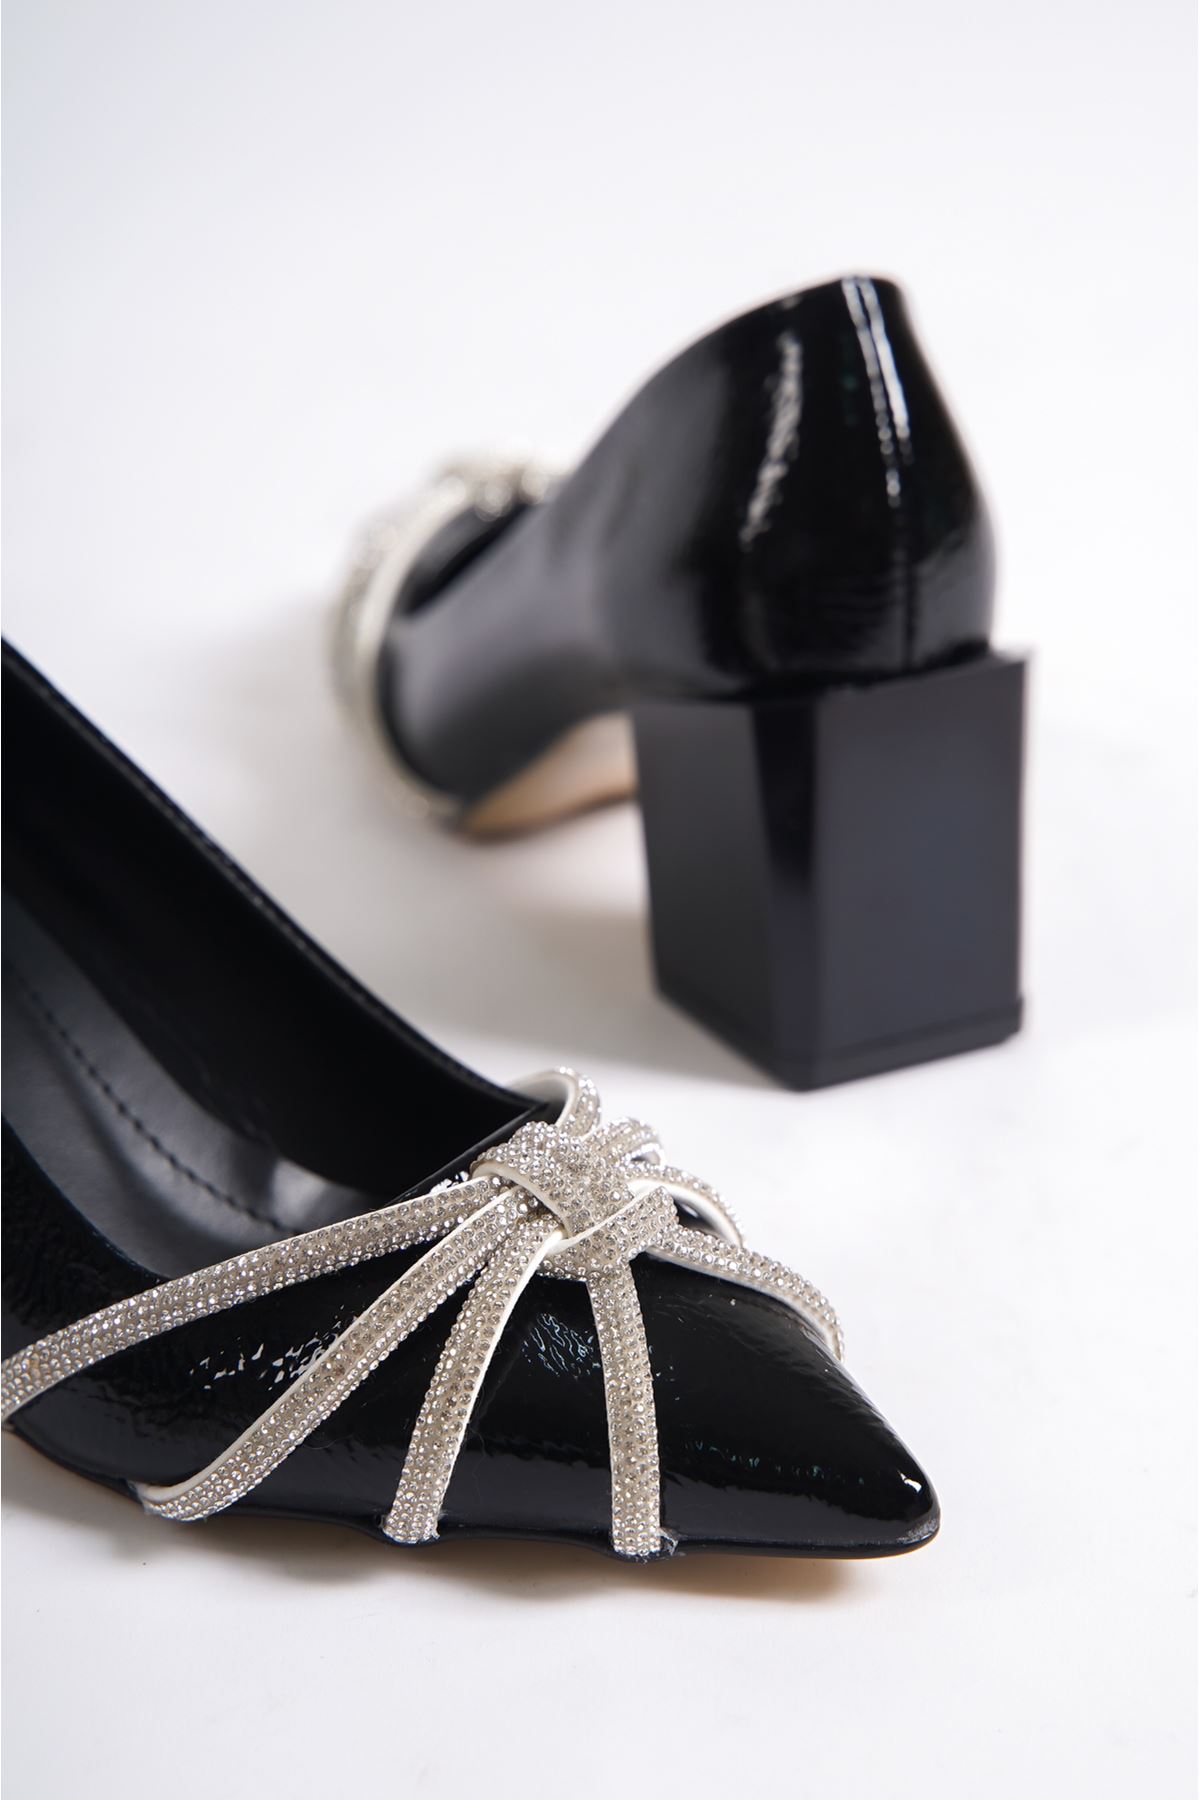 Charler Siyah Rugan Topuklu Kadın Ayakkabı